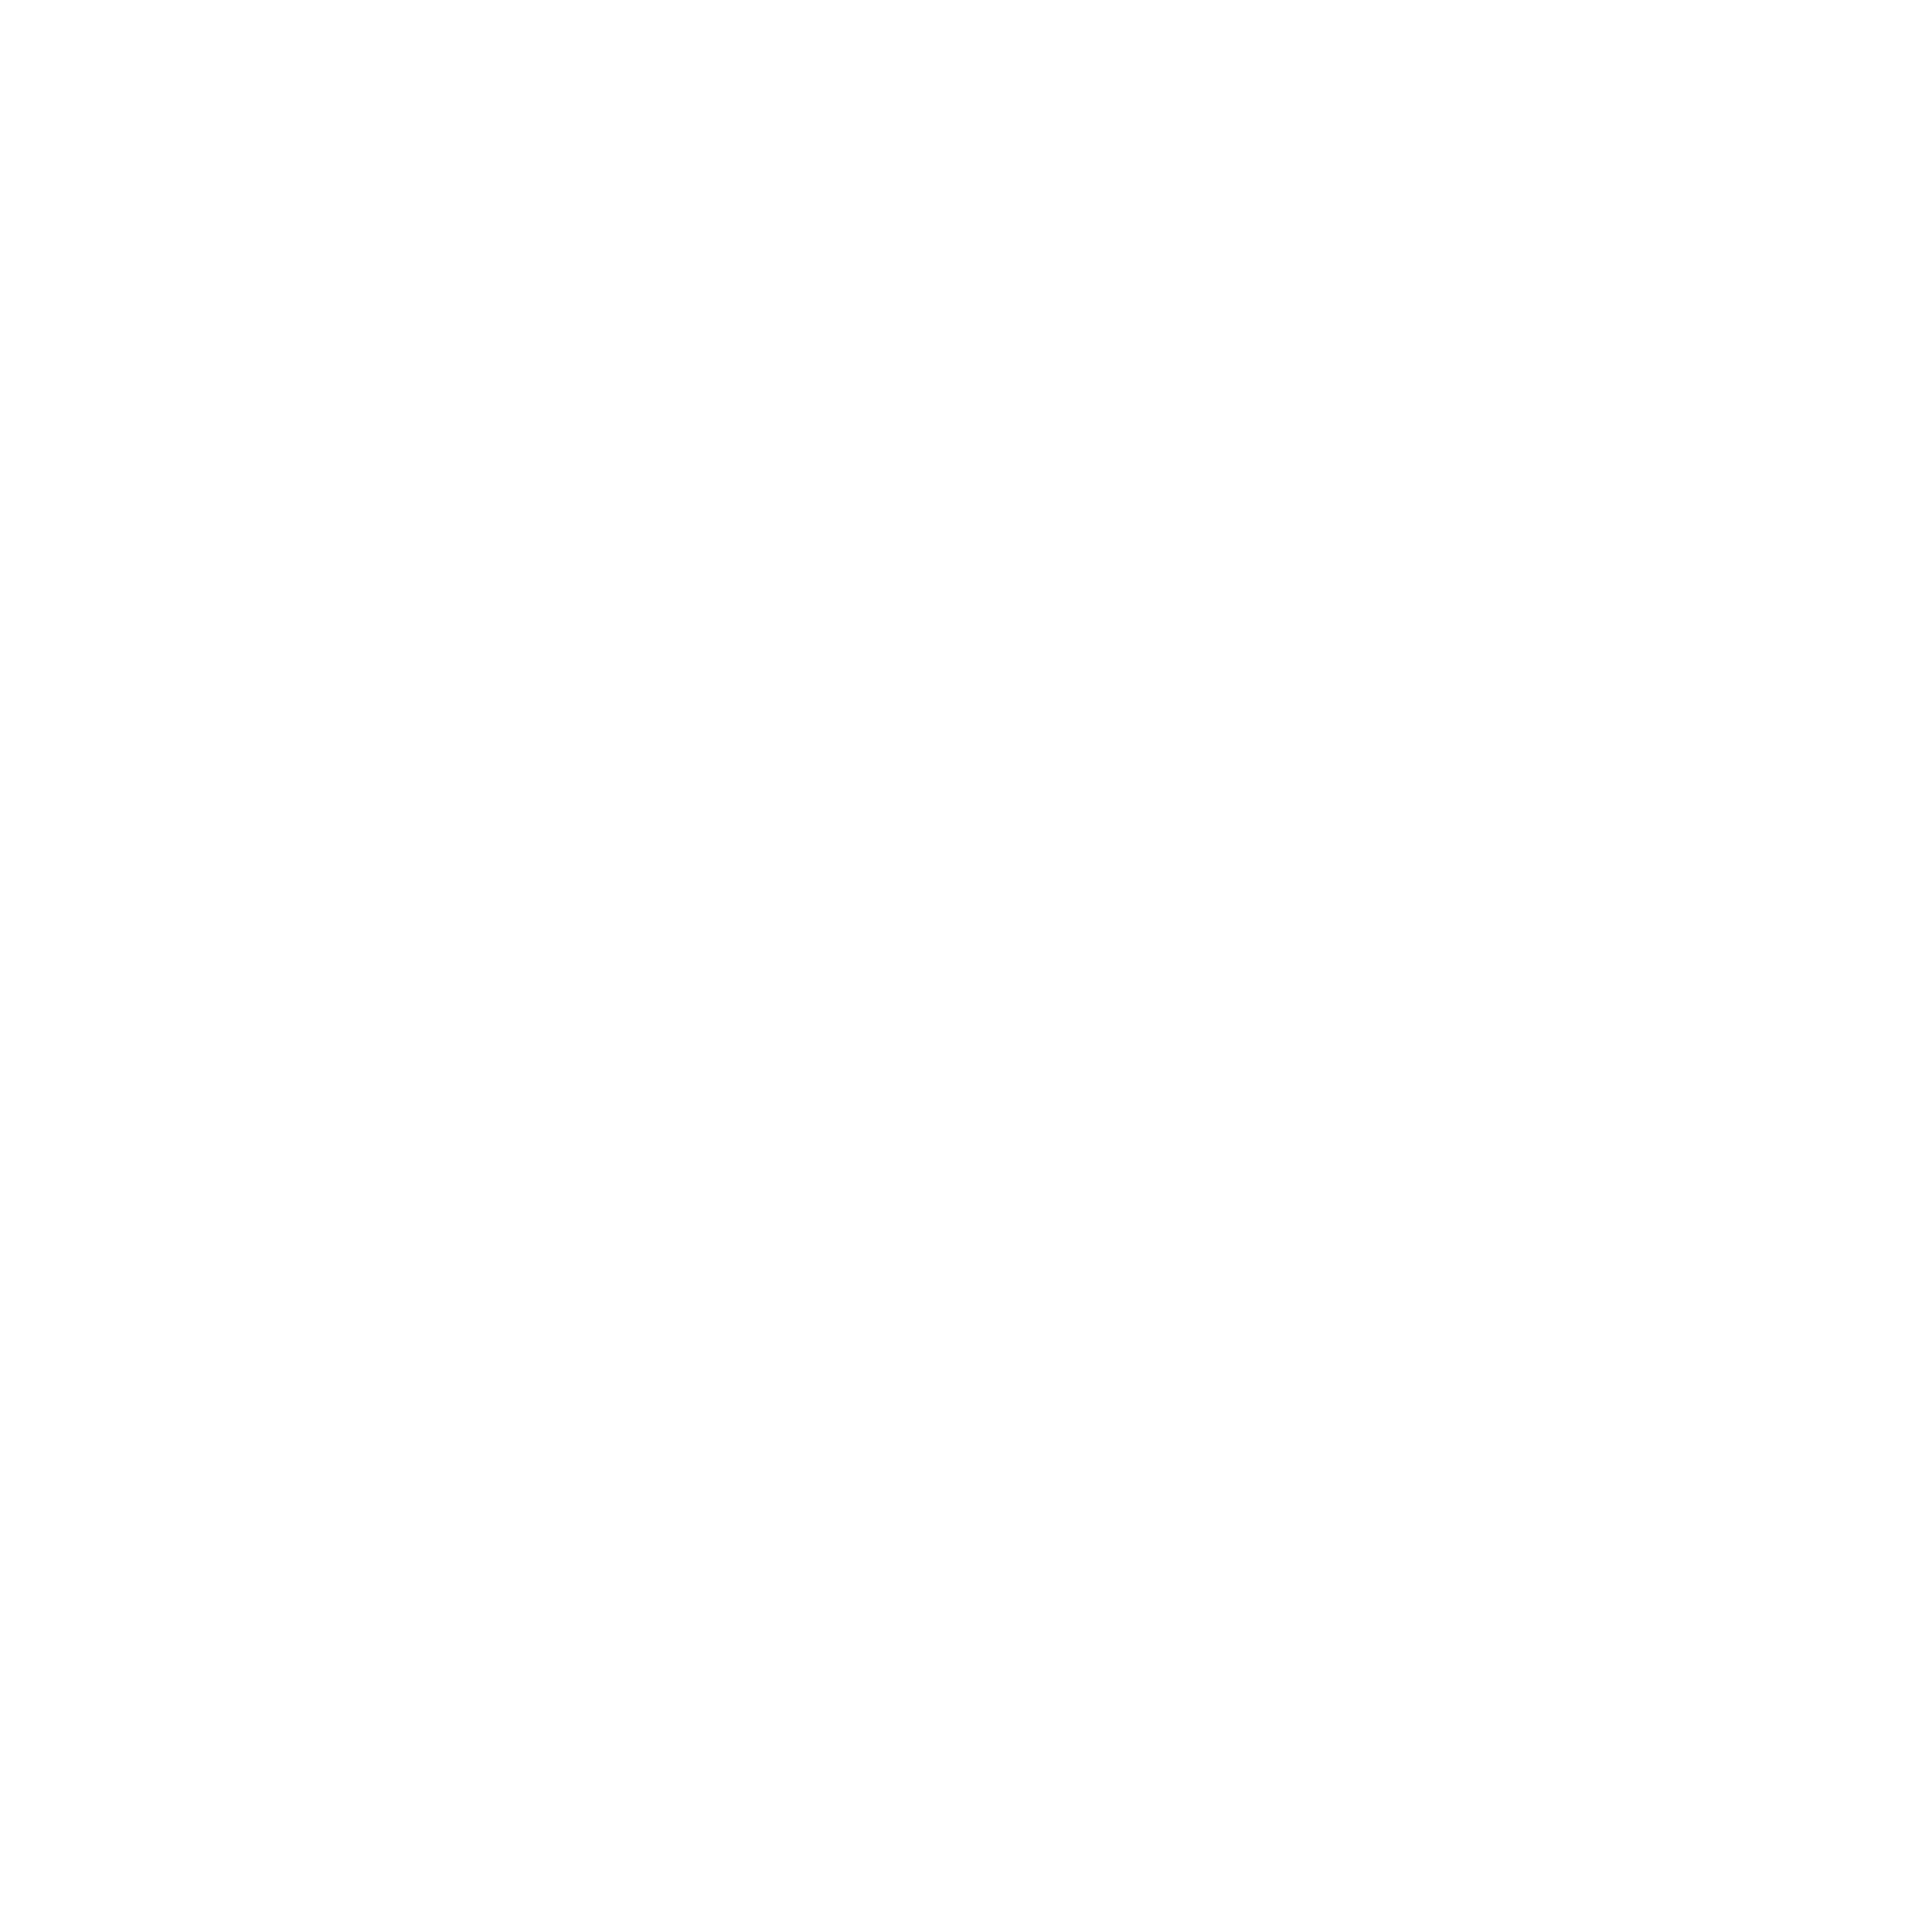 TSCG logo white